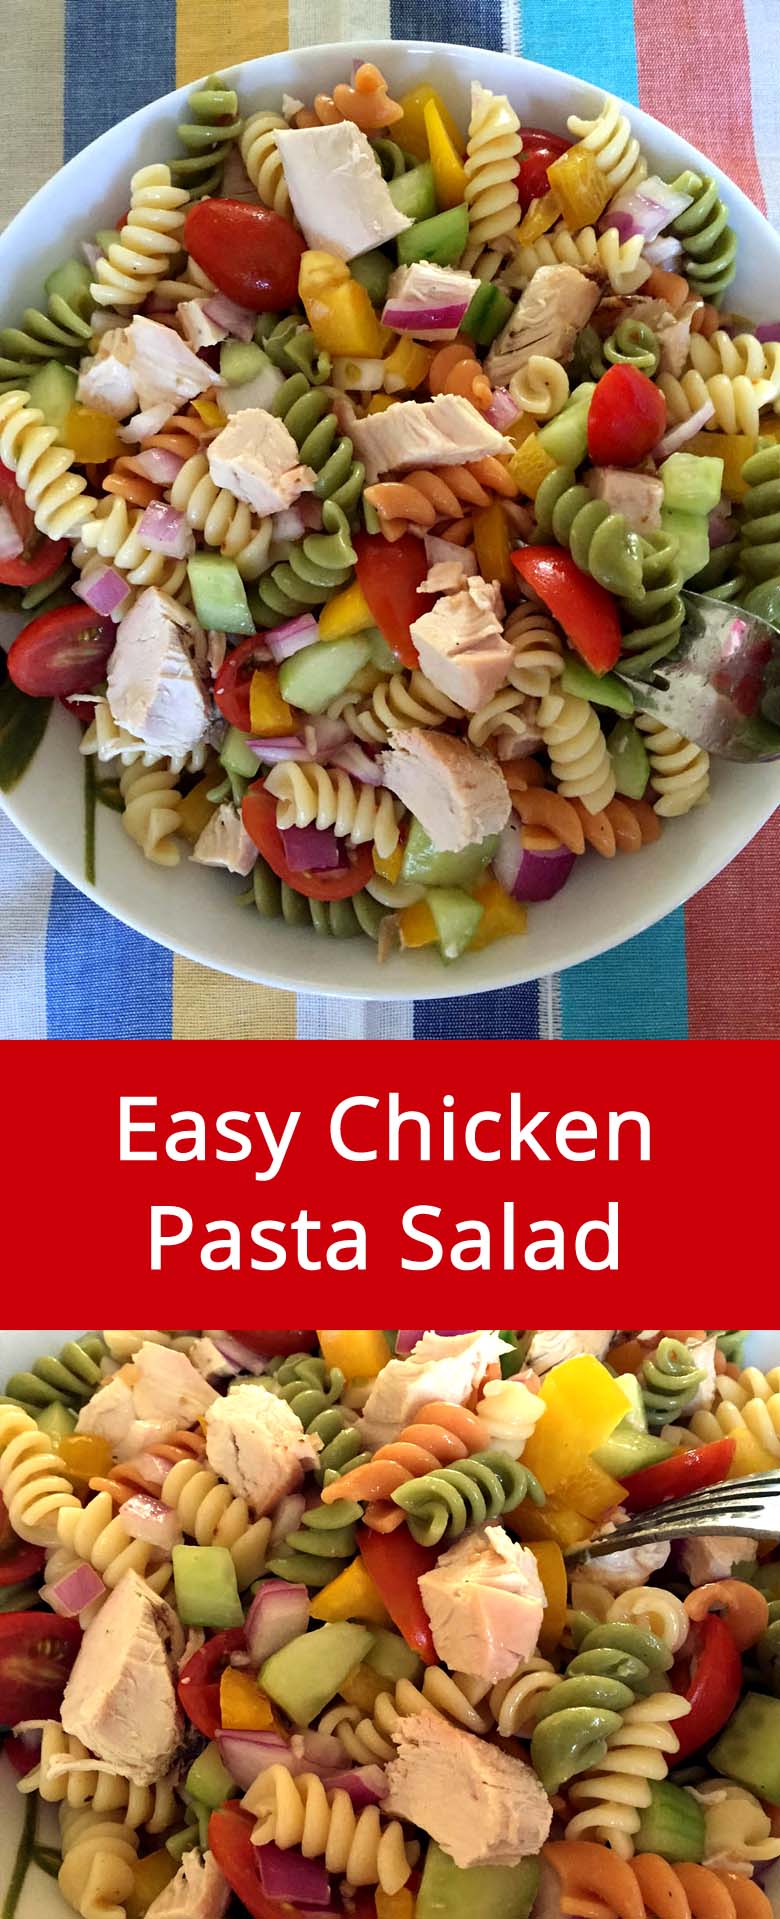 Chicken Pasta Salad Recipe - Awesome Main Dish Pasta Salad, Makes Complete Dinner! | MelanieCooks.com